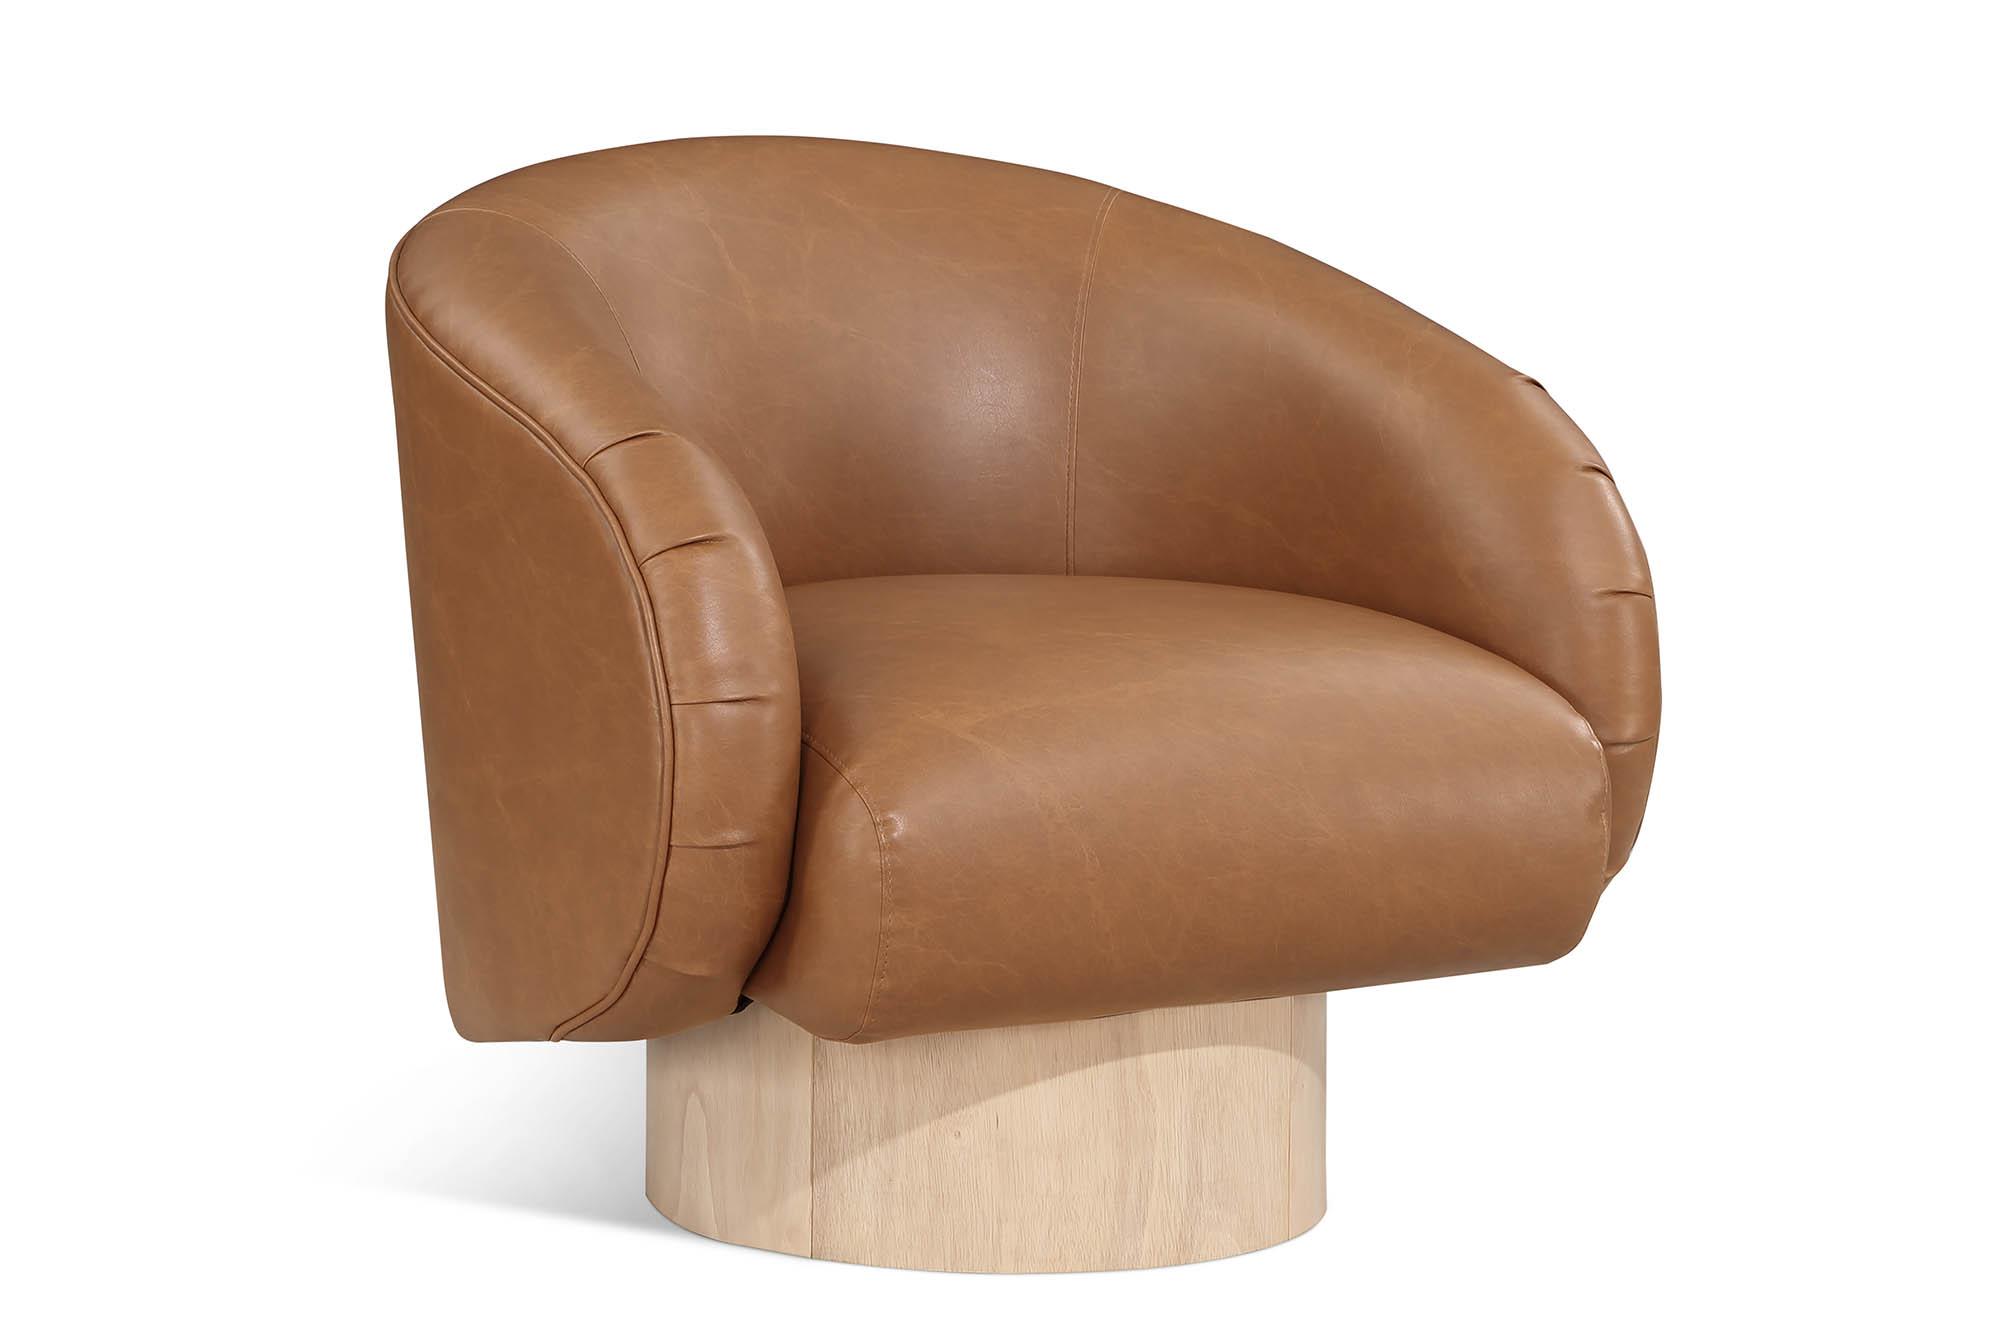 Contemporary, Modern Swivel Chair GIBSON 484Cognac 484Cognac in Cognac Faux Leather